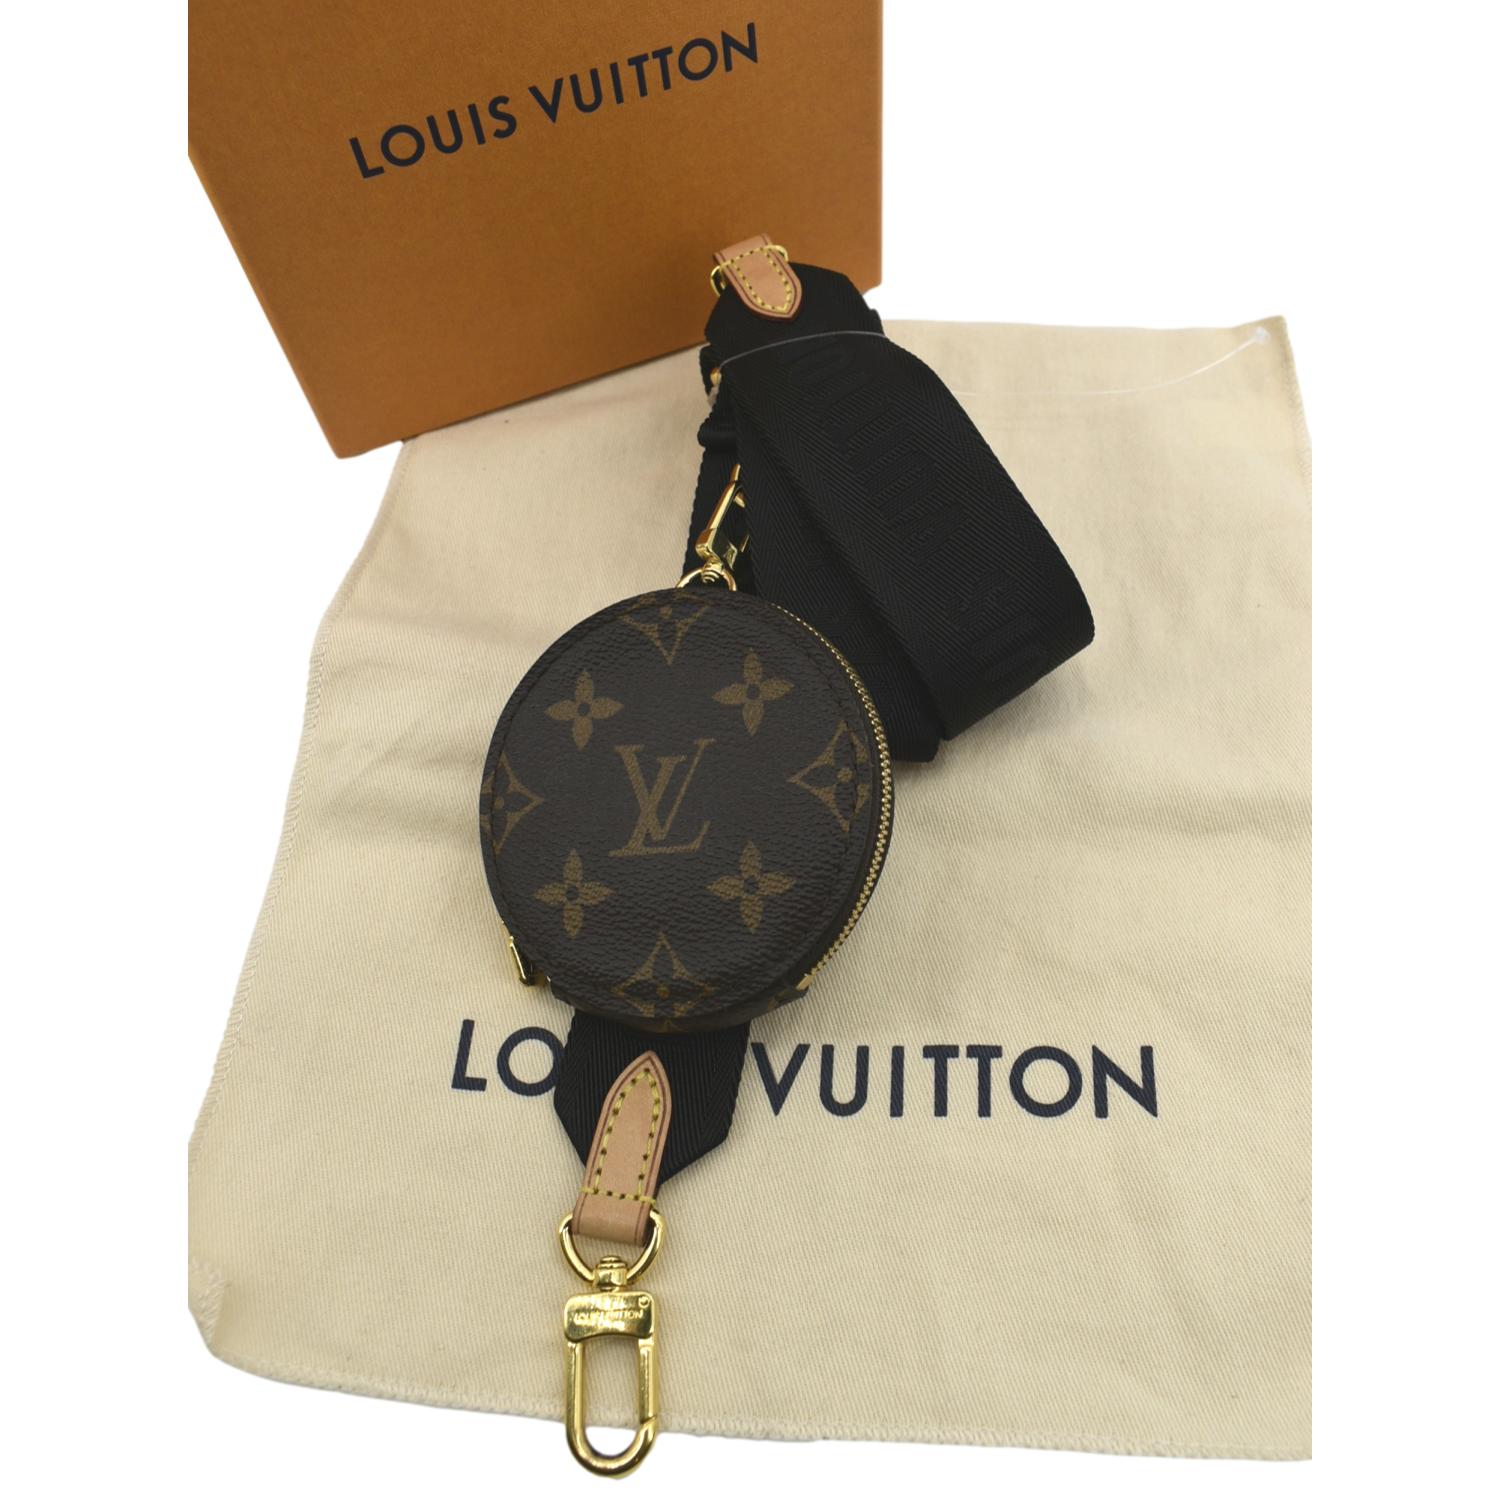 Louis Vuitton Monogram Canvas Nylon Strap with Coin Purse